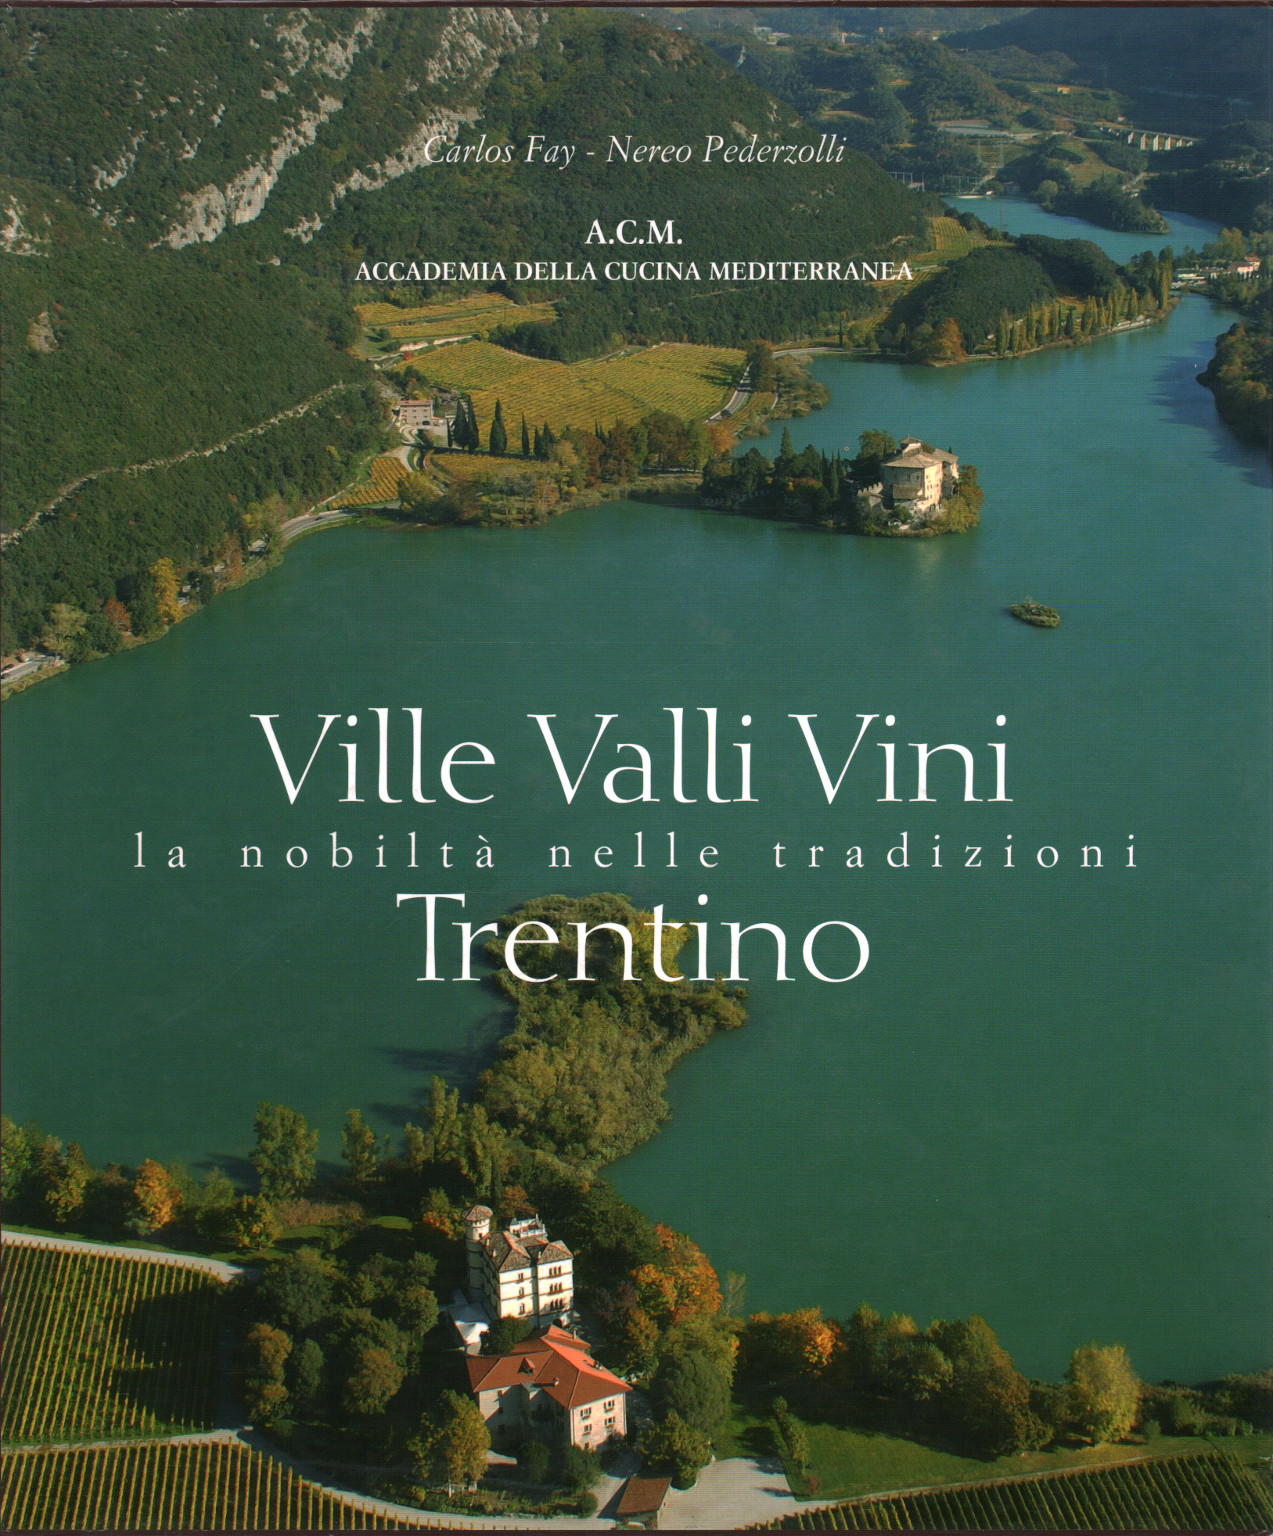 Ville Valli Vini nobility in traditions